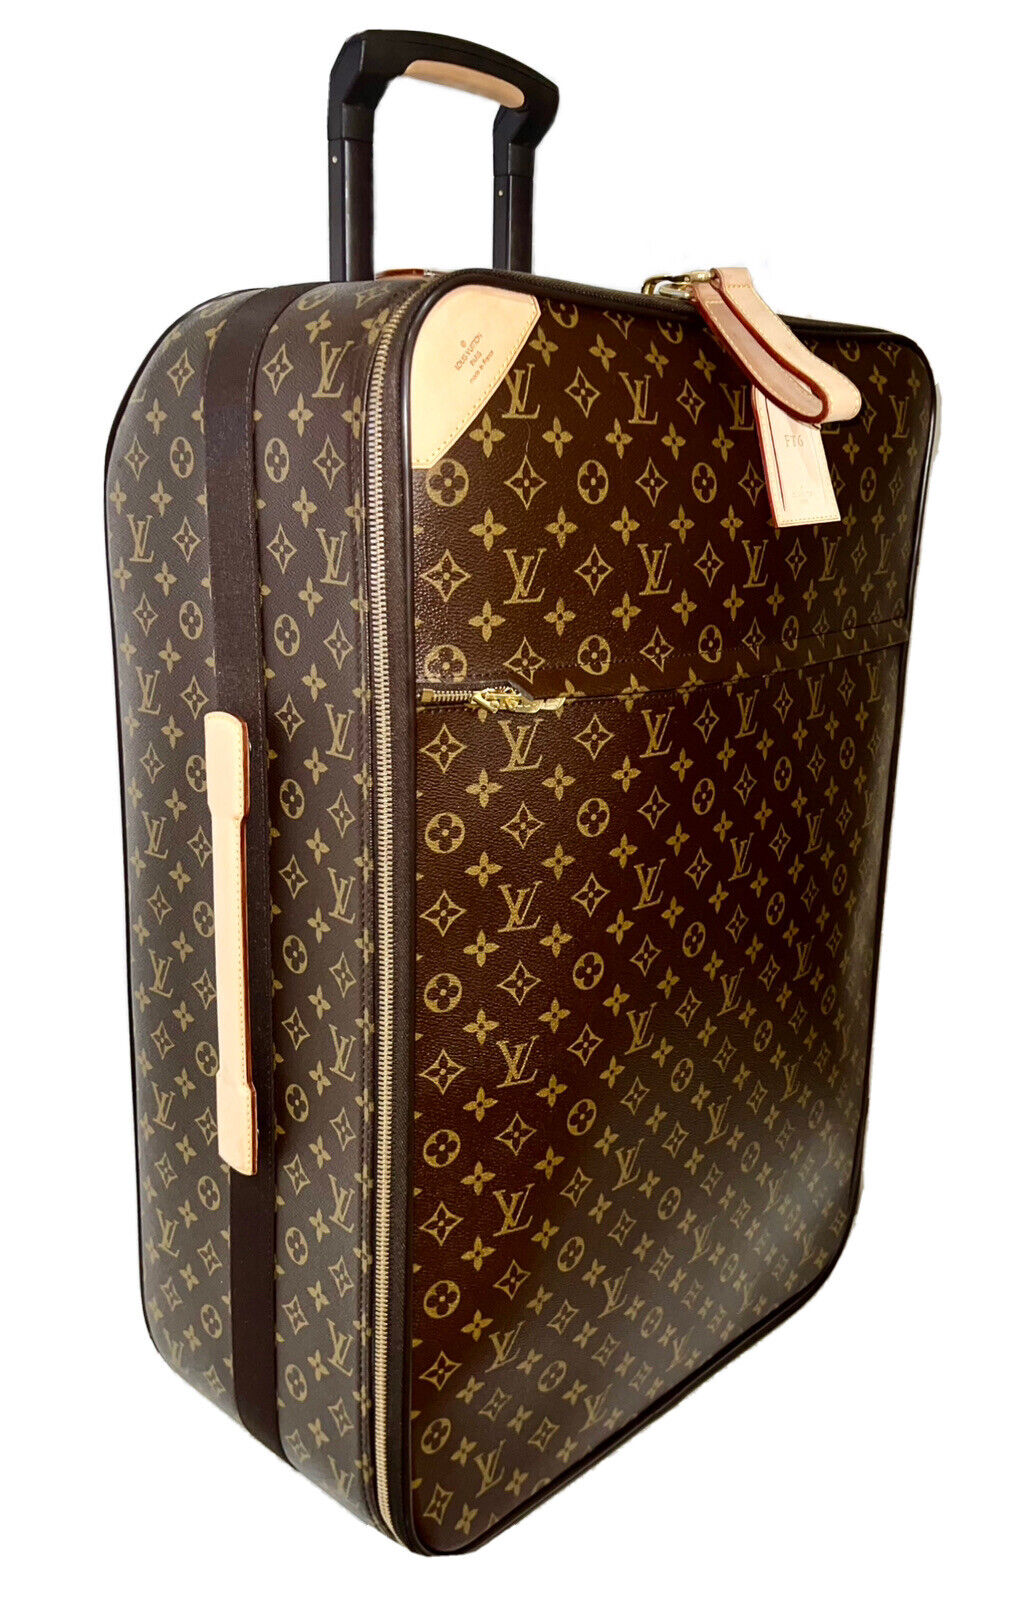 Louis Vuitton Pegase 70 Suitcase Monogram Bag Authentic 🇫🇷